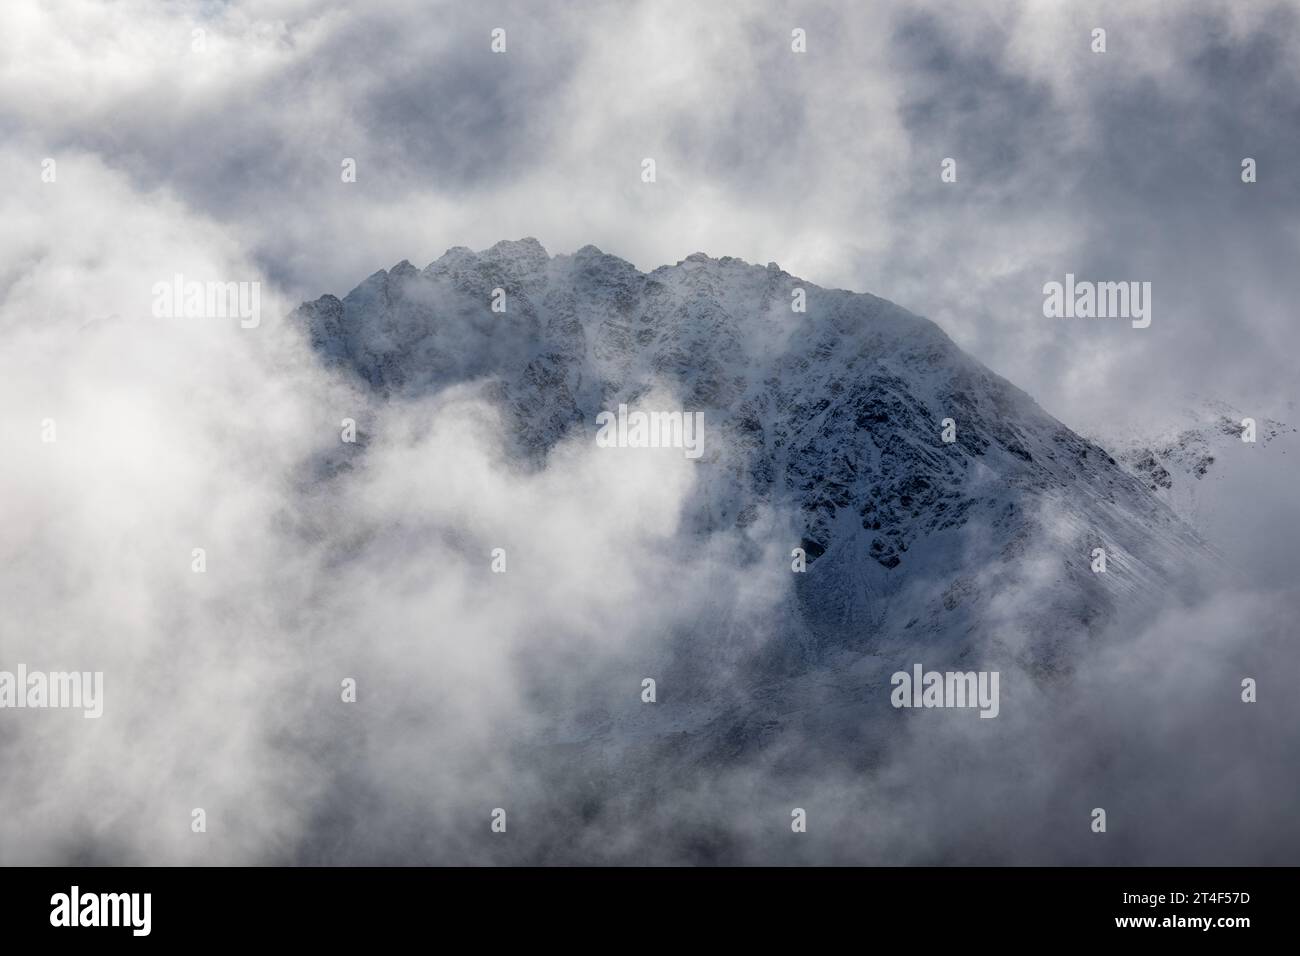 Mountain peak emerge through the misty clouds at swiss alps near Davos, Switzerland Stock Photo